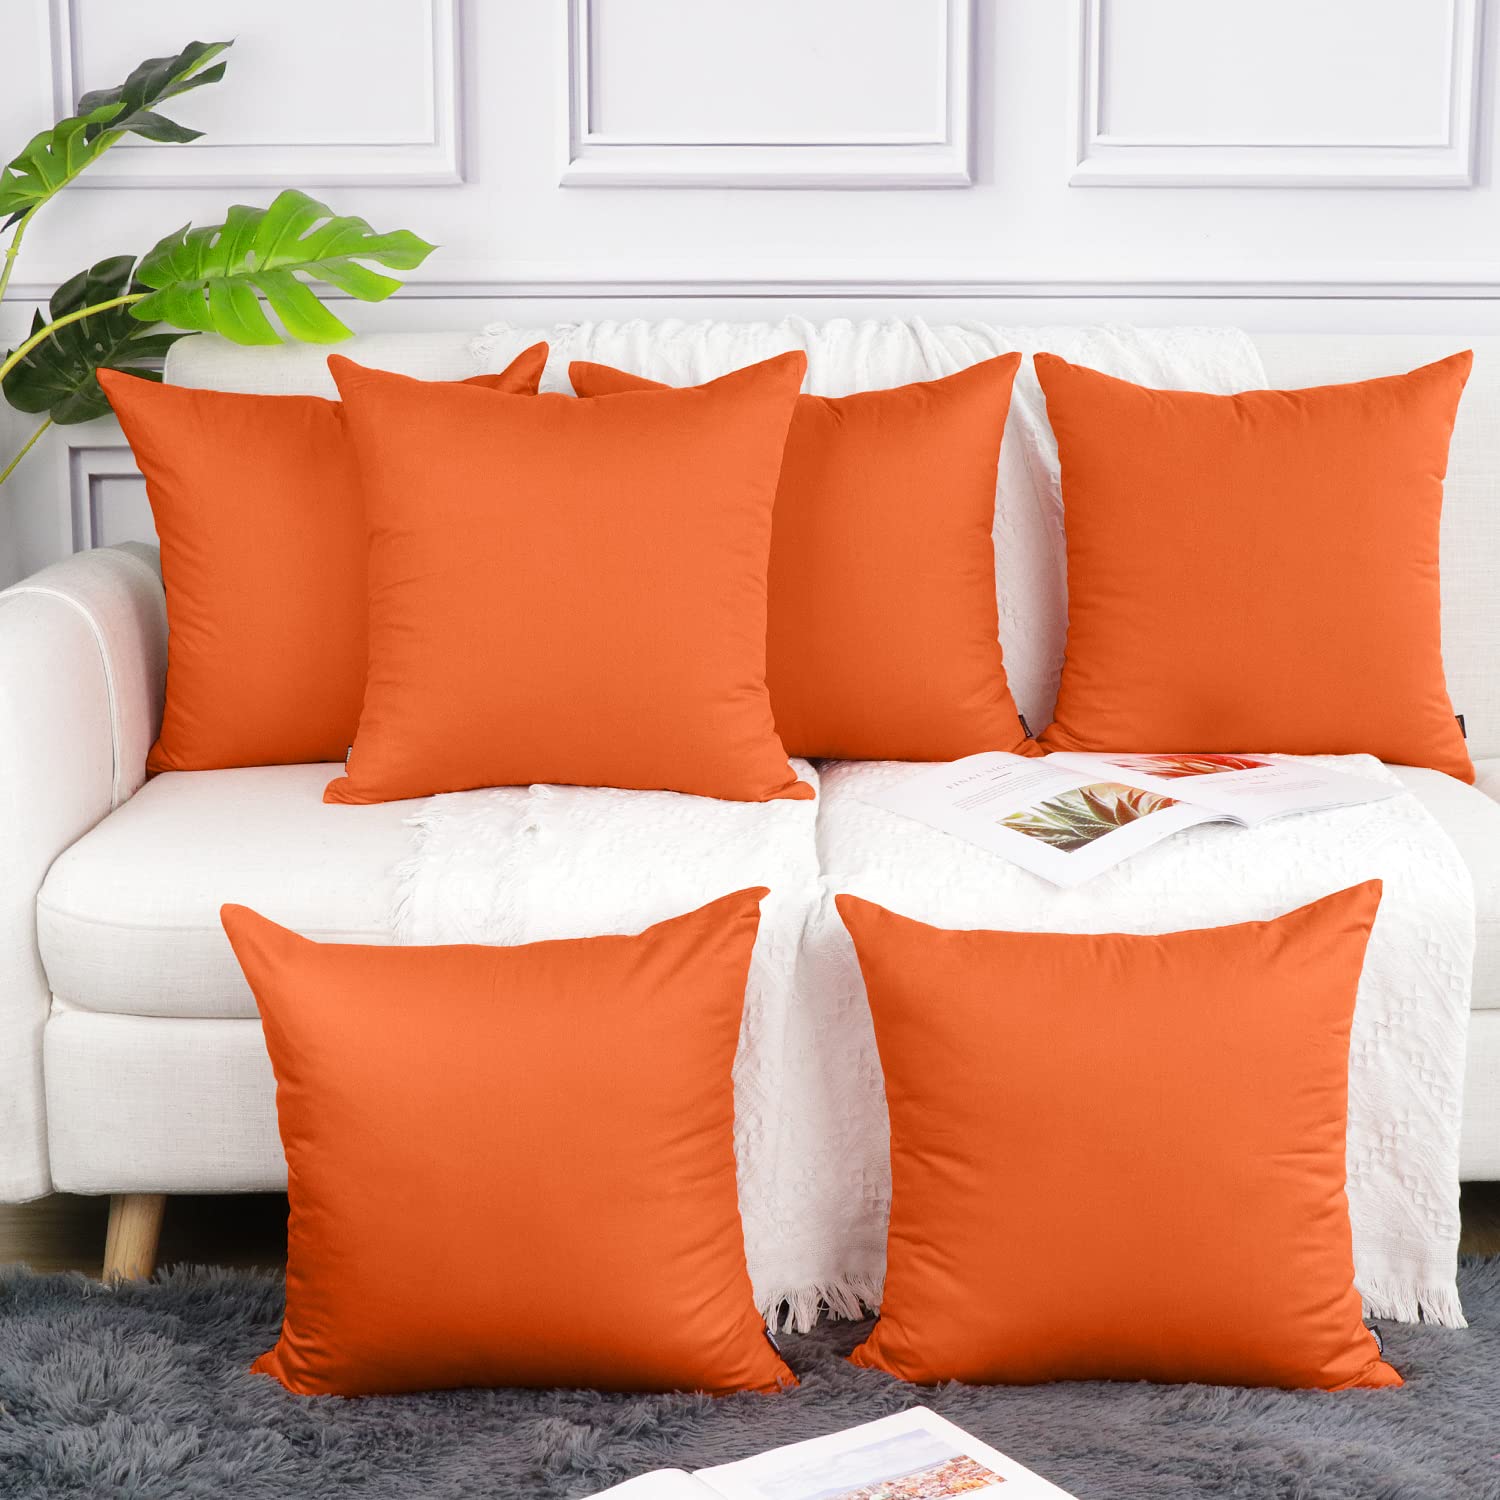 How To Make Sofa Pillow Covers